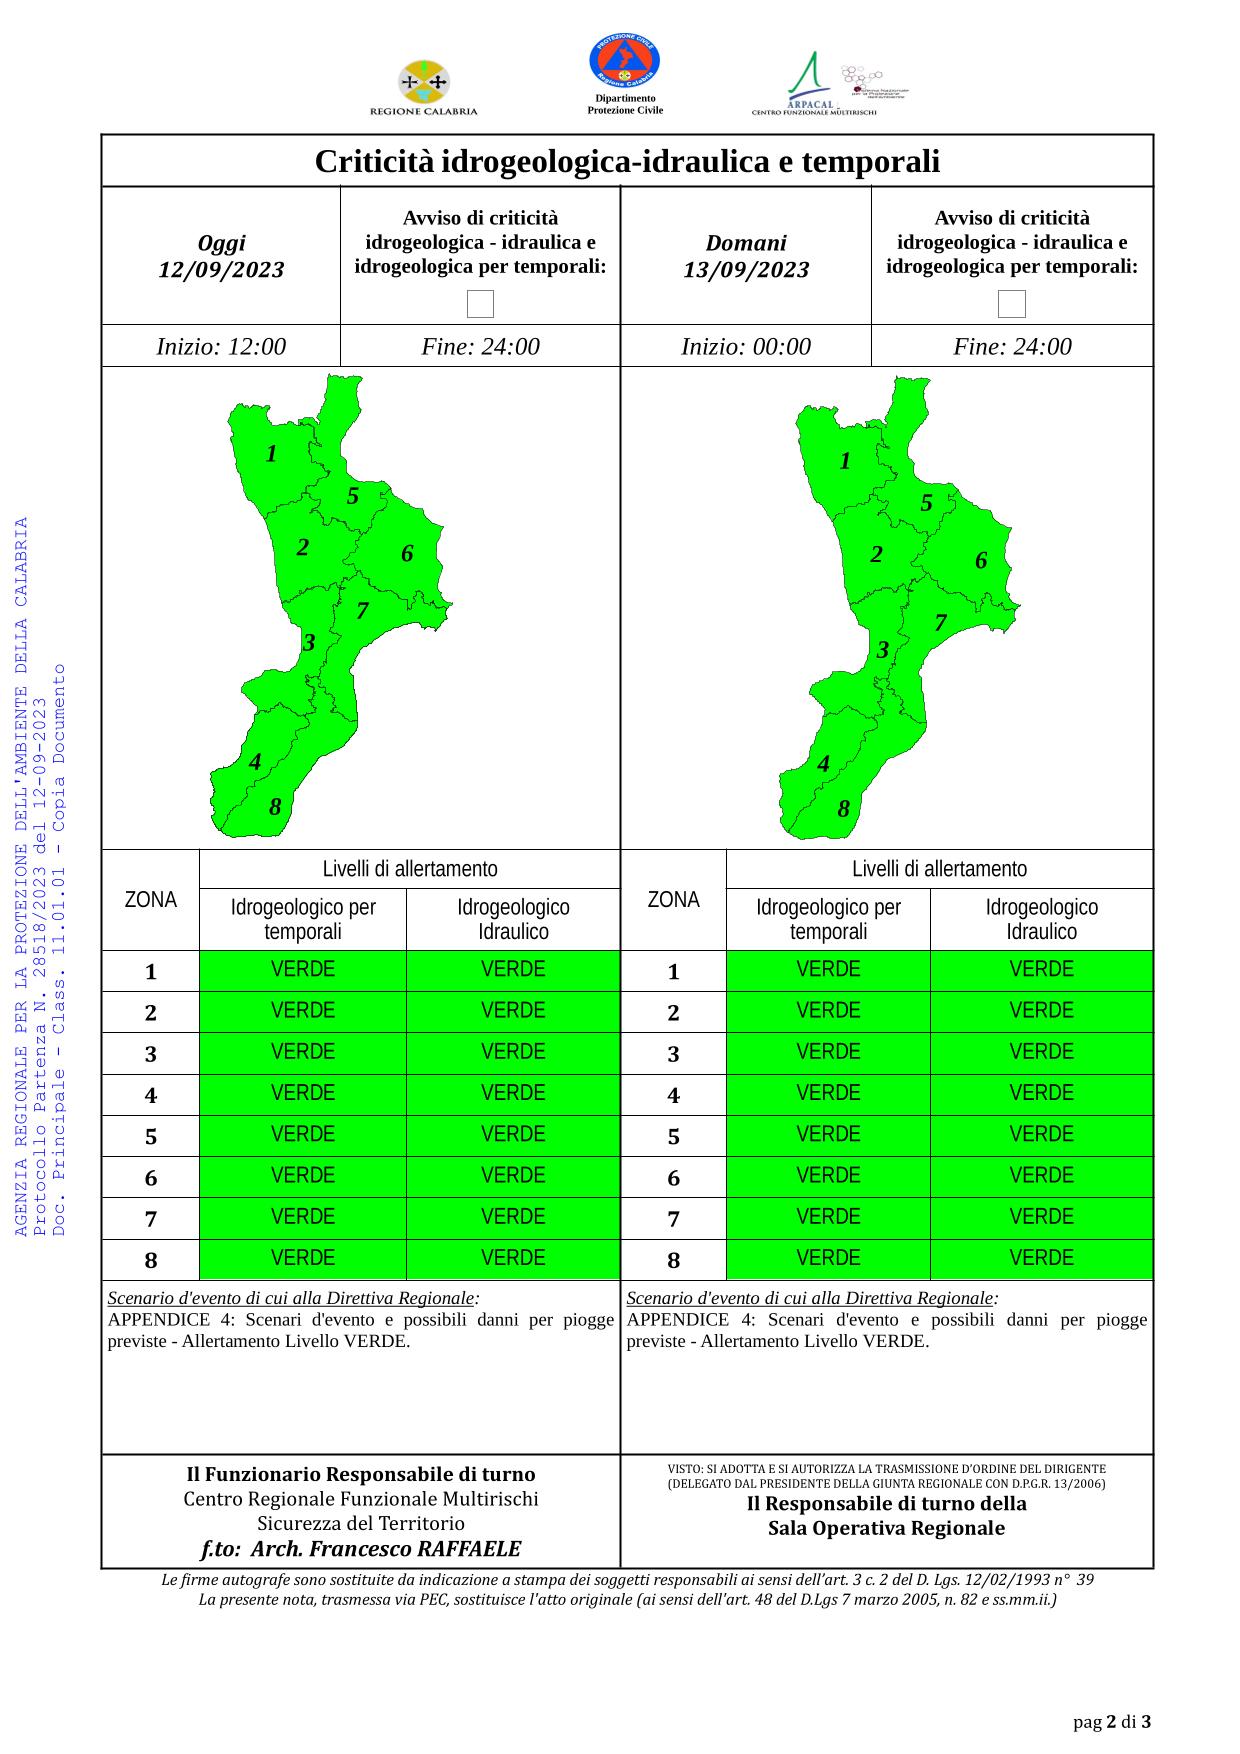 Criticità idrogeologica-idraulica e temporali in Calabria 12-09-2023